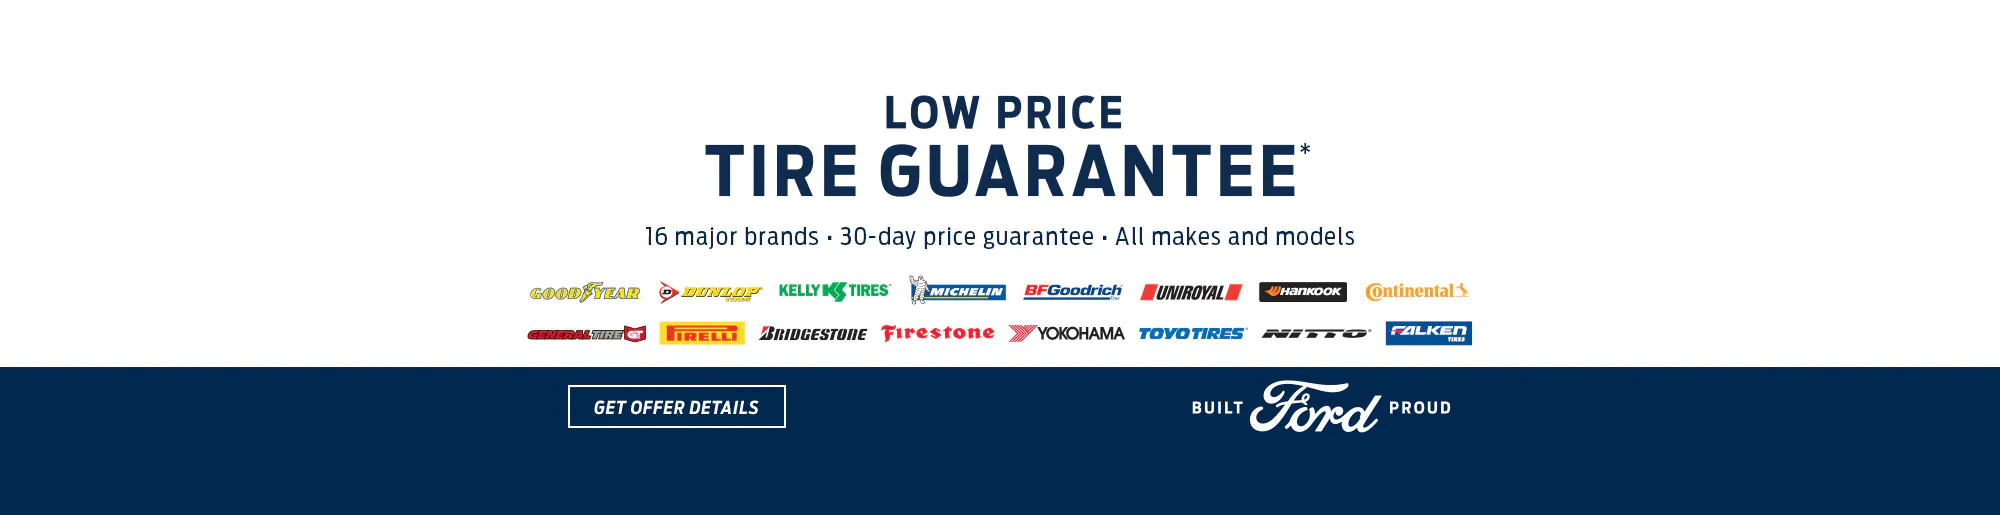 Low price tire guarantee